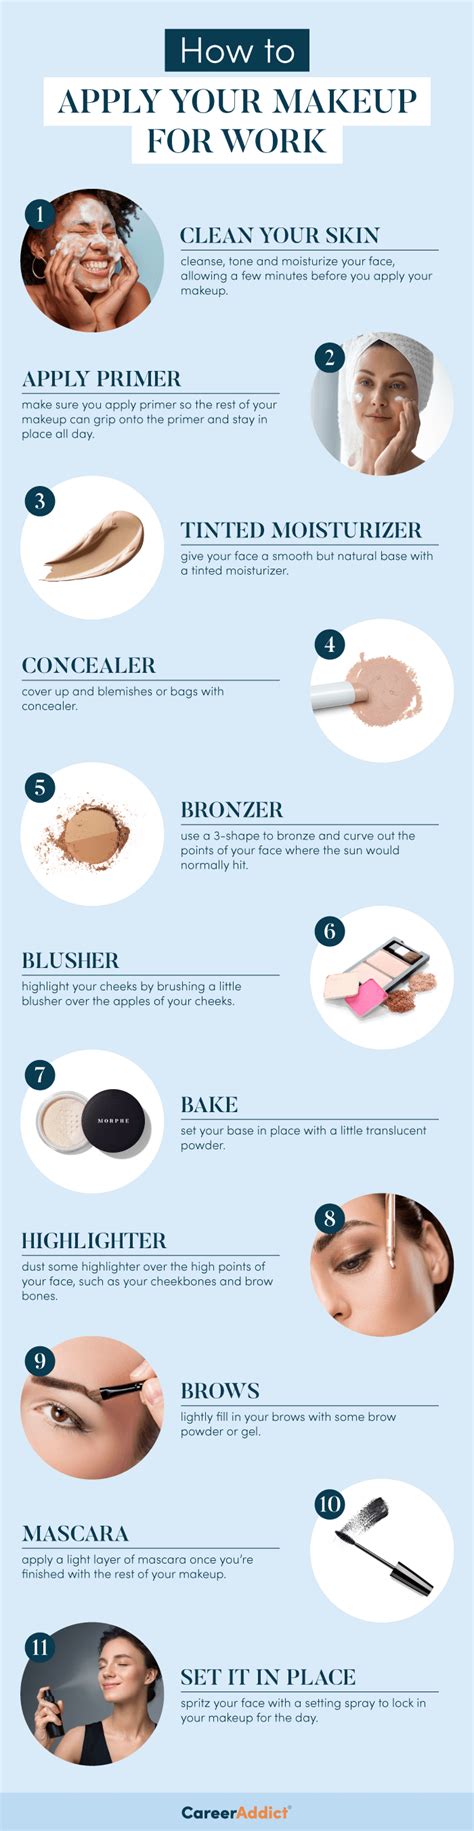 Steps When Applying Makeup